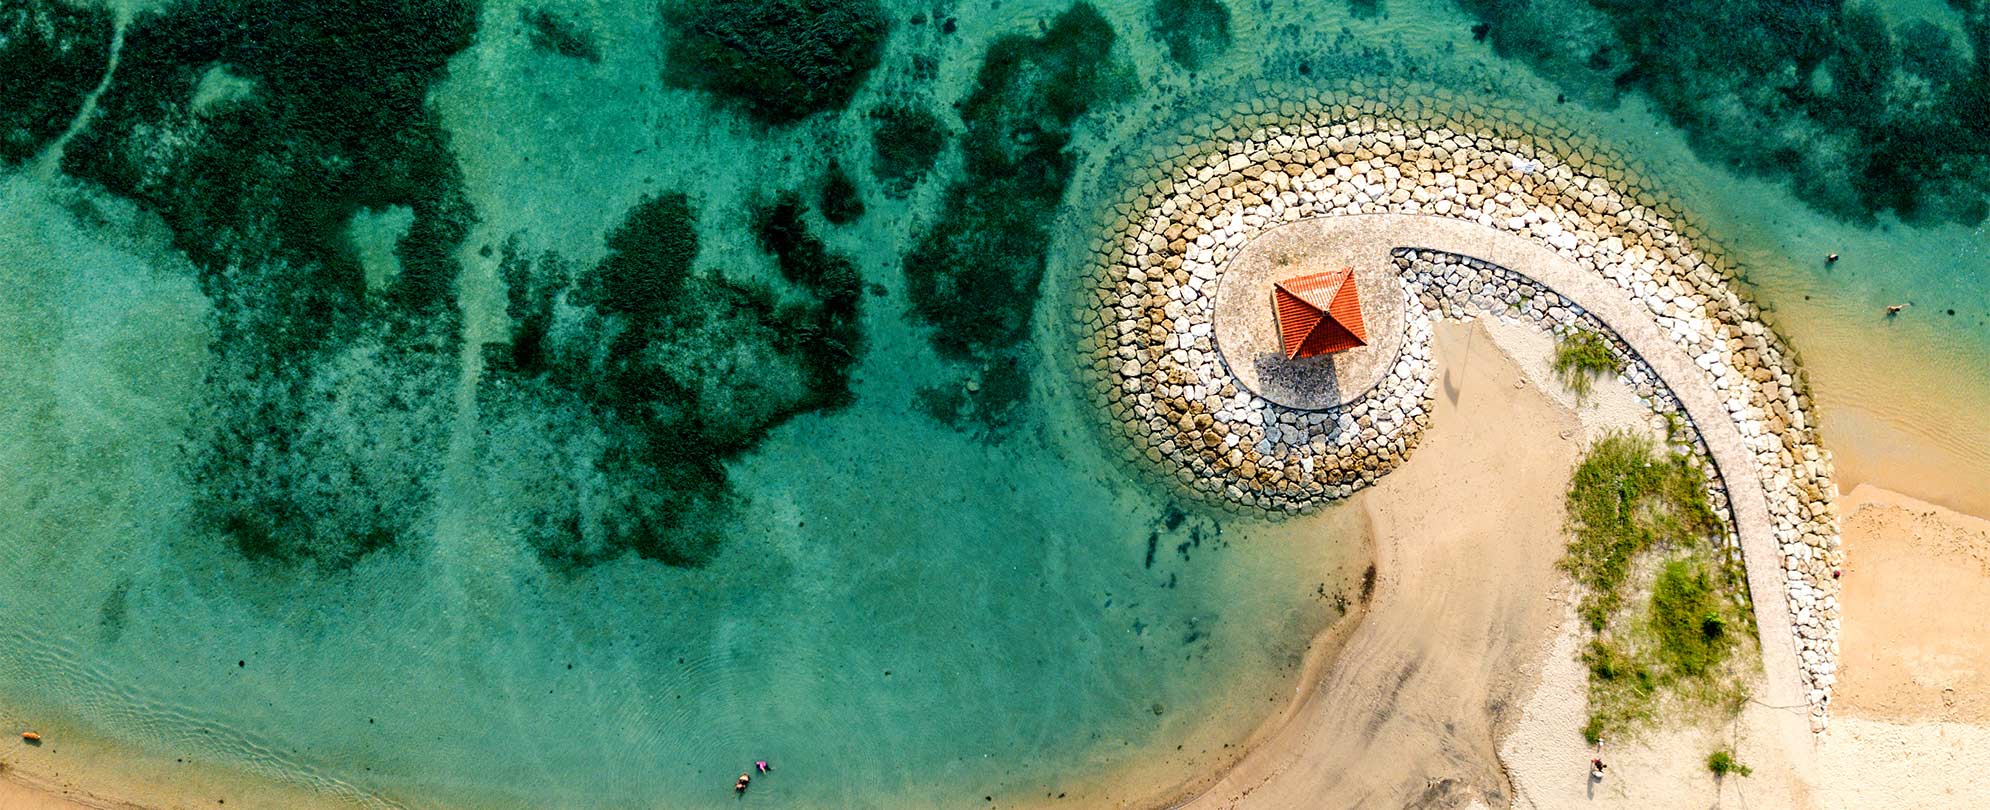 A bird's-eye view of a spiraling stone walkway on a beach by a crystal blue ocean.